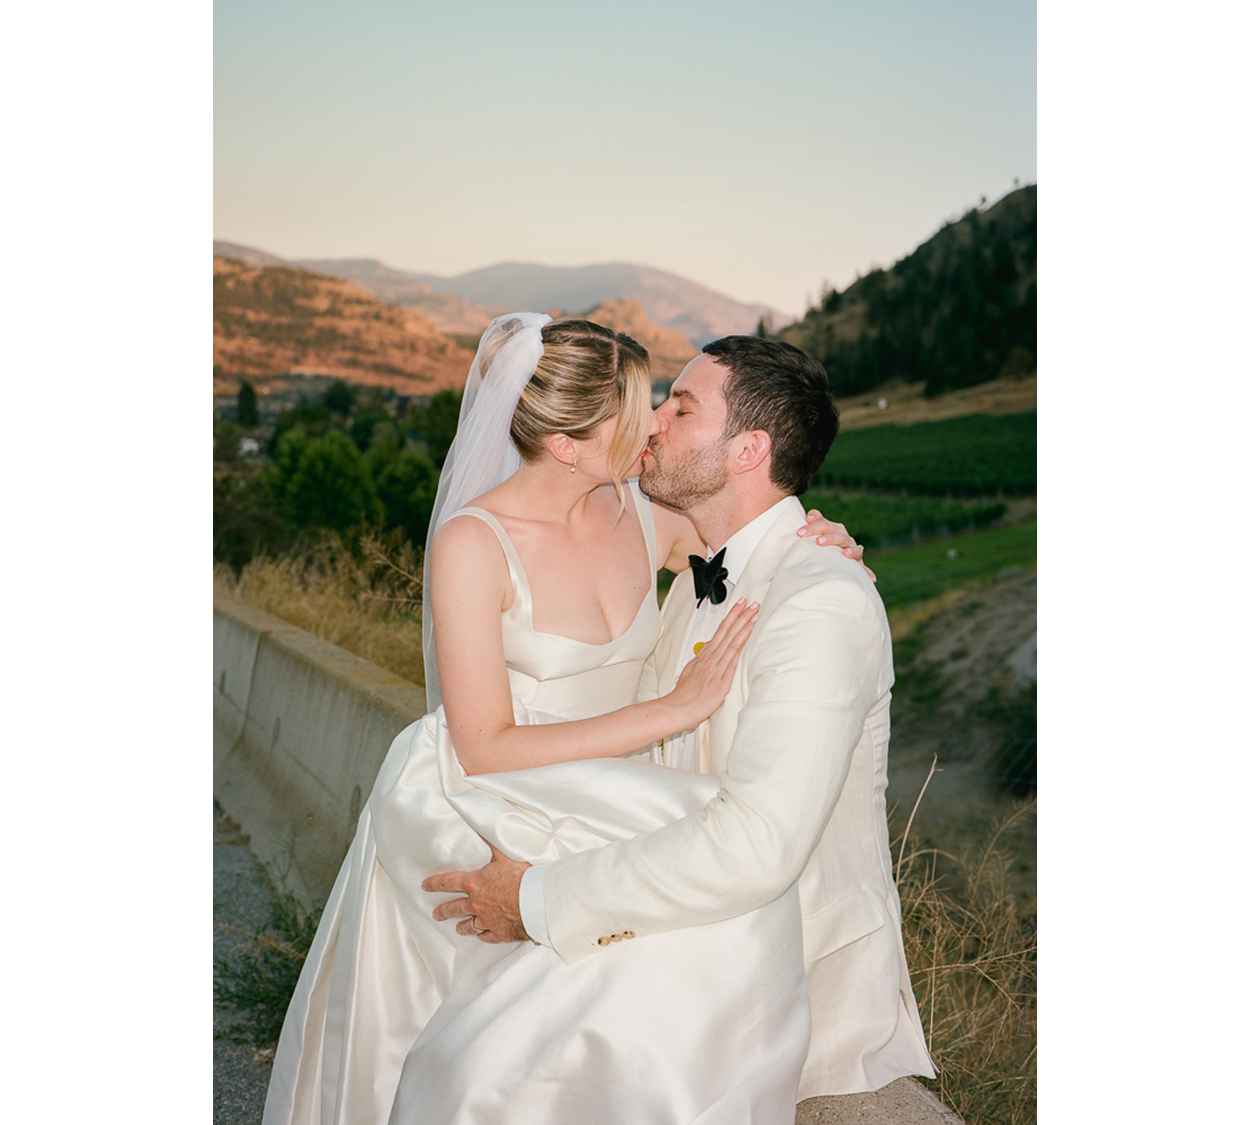 Linden-Gardens-Wedding-Venue-Okanagan-Penticton-Photography-Film-Analog-58.PNG